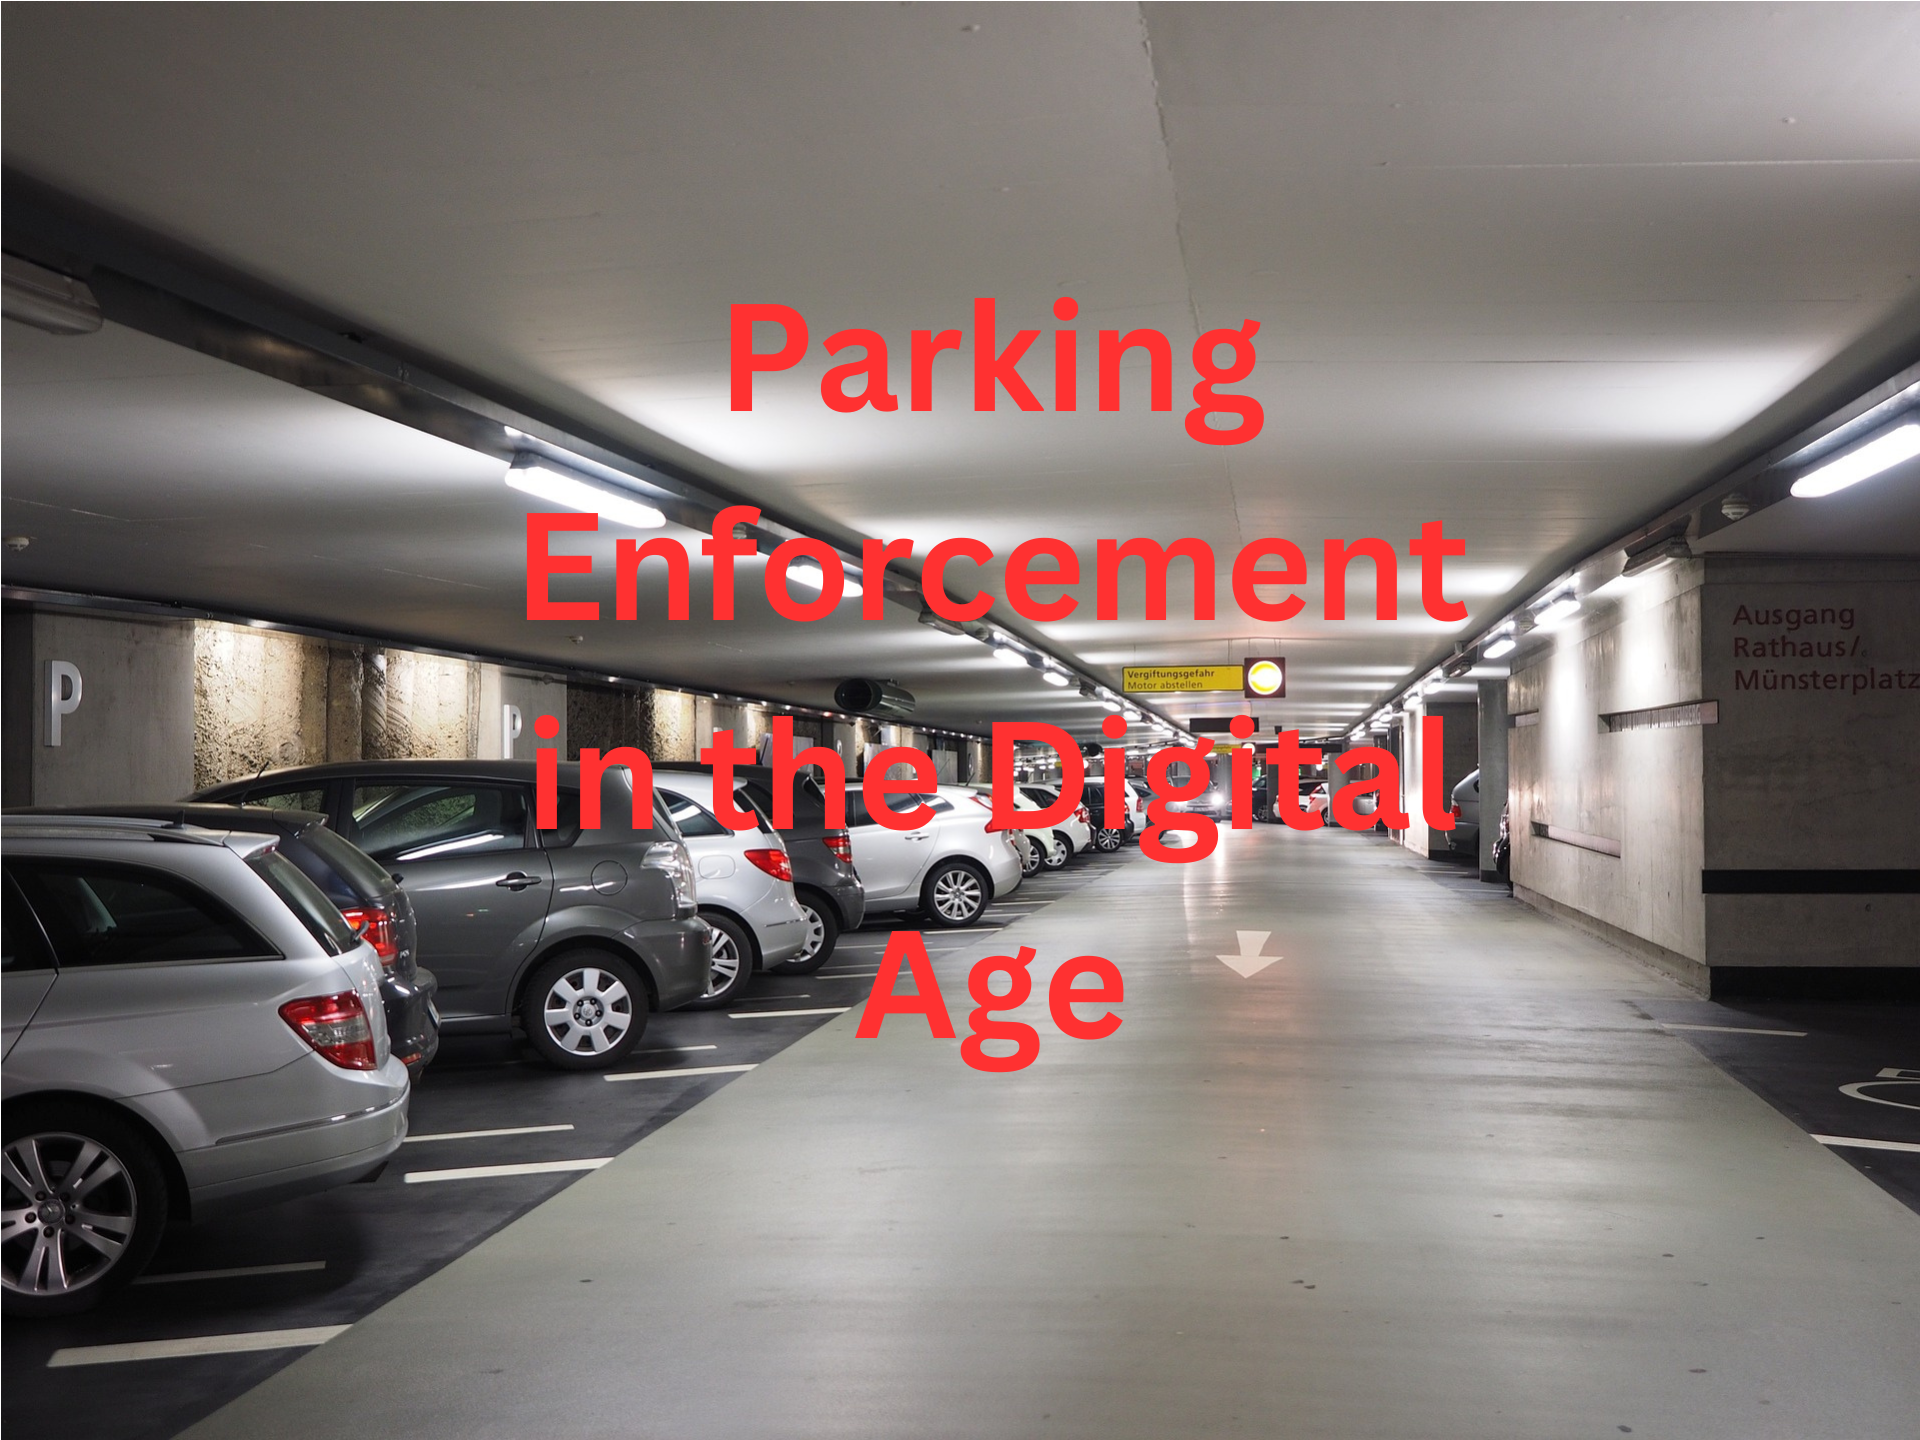 Parking Enforcement in the Digital Age